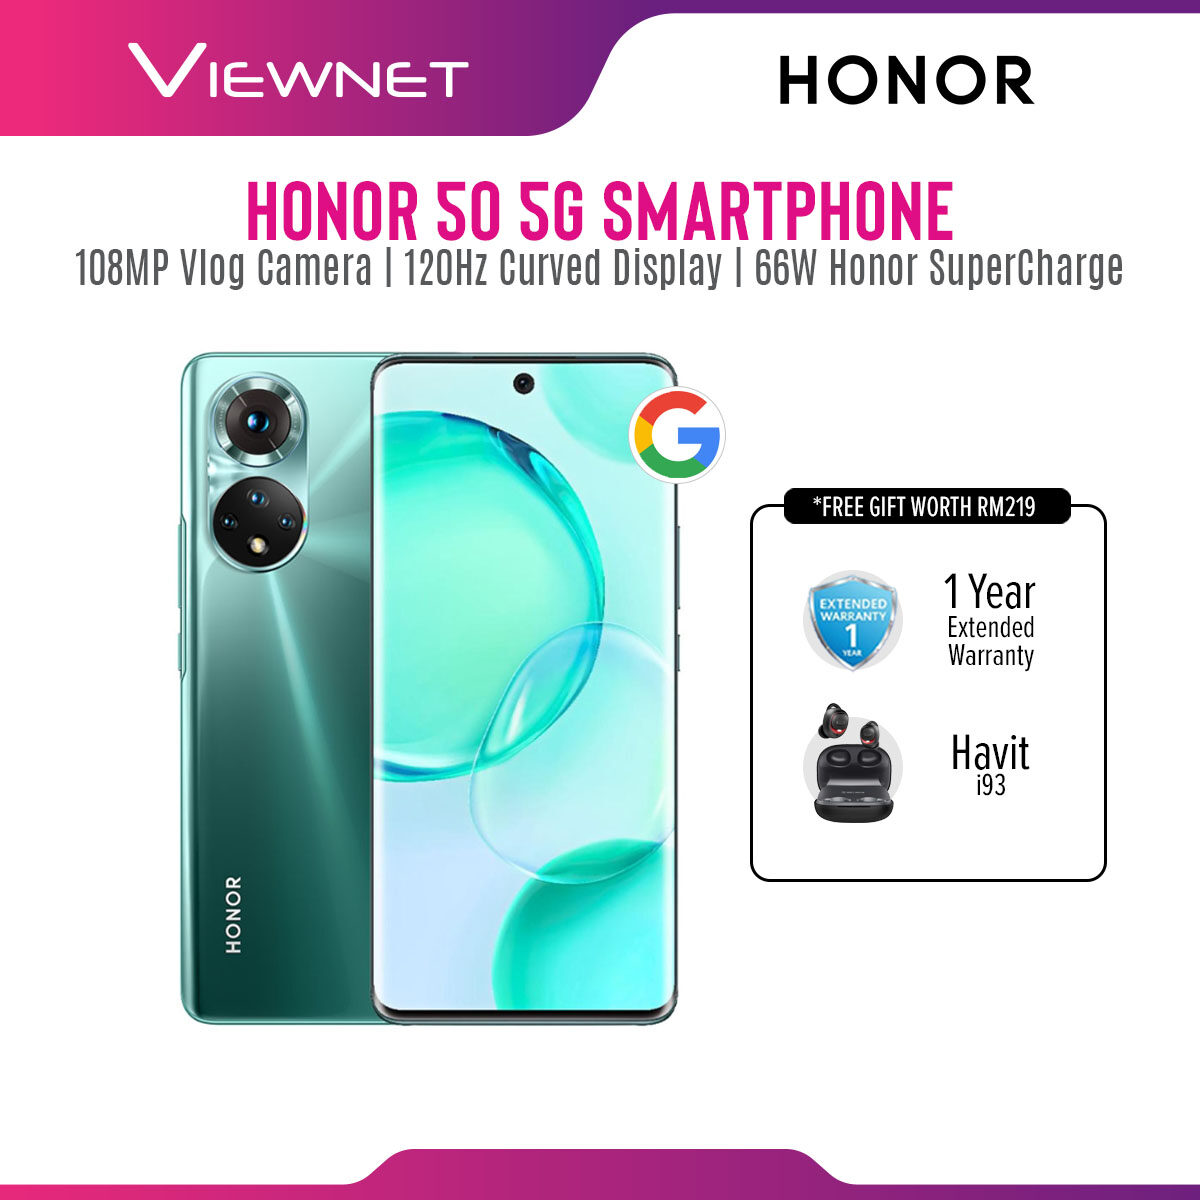 [New] HONOR 50 5G Smartphone with 6GB+128GB / 8GB+256GB - 1+1 Year Warranty